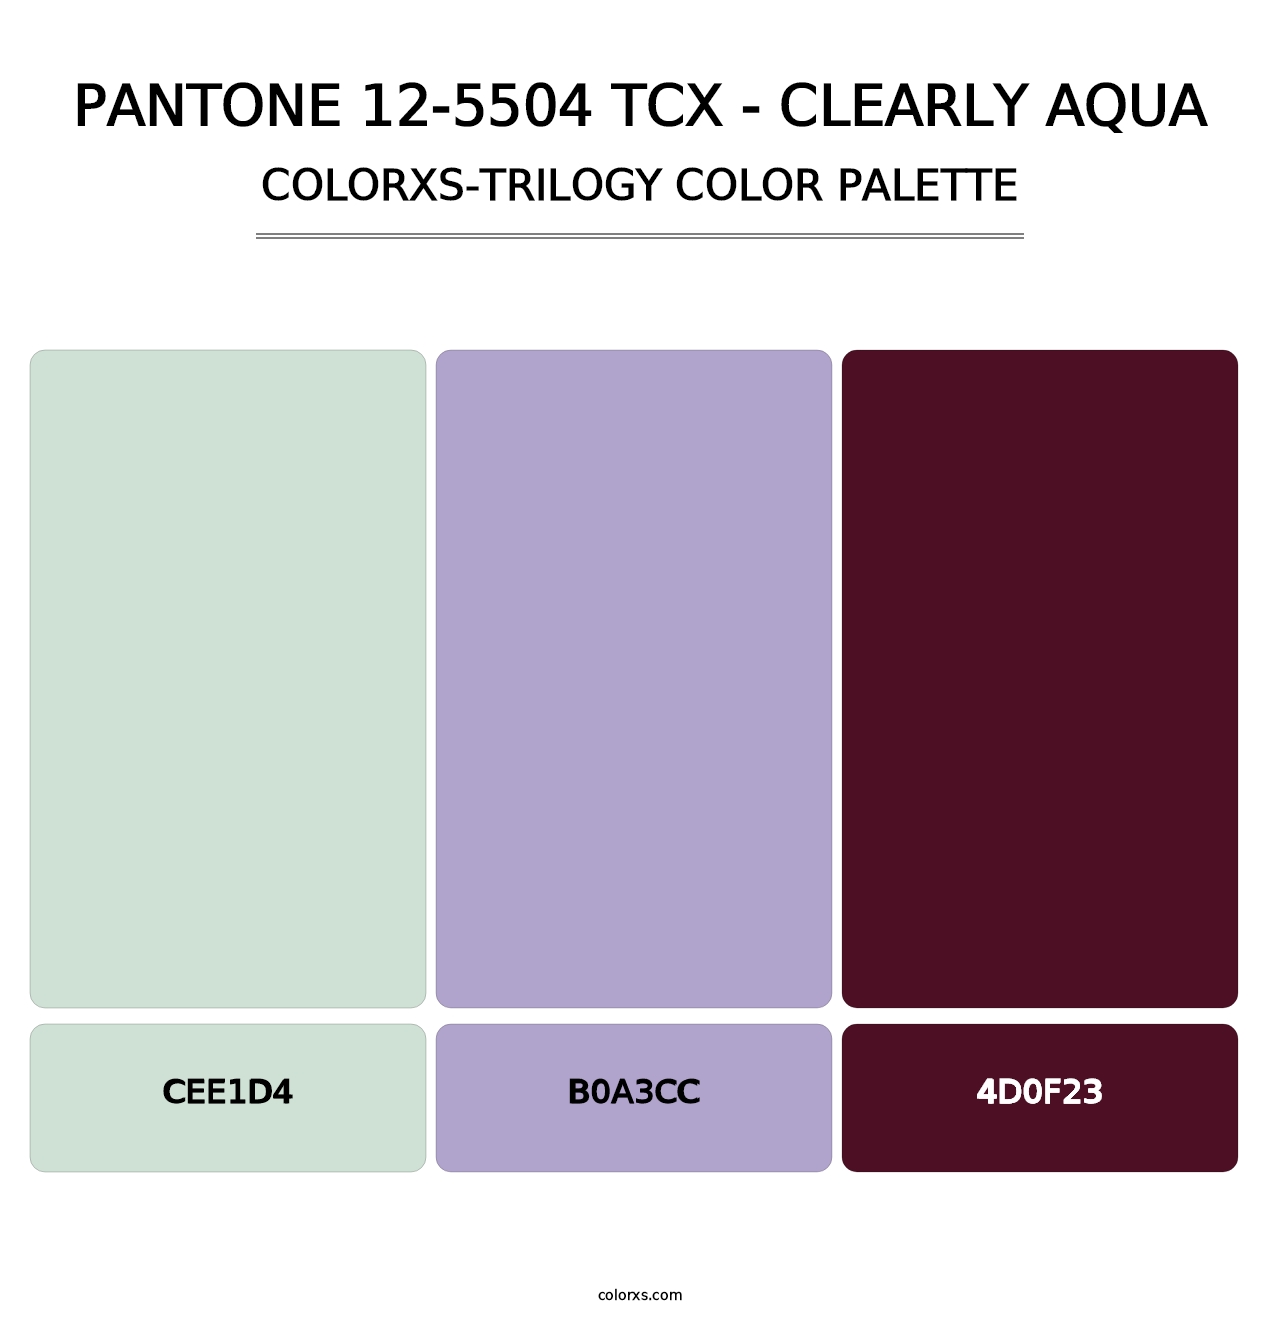 PANTONE 12-5504 TCX - Clearly Aqua - Colorxs Trilogy Palette